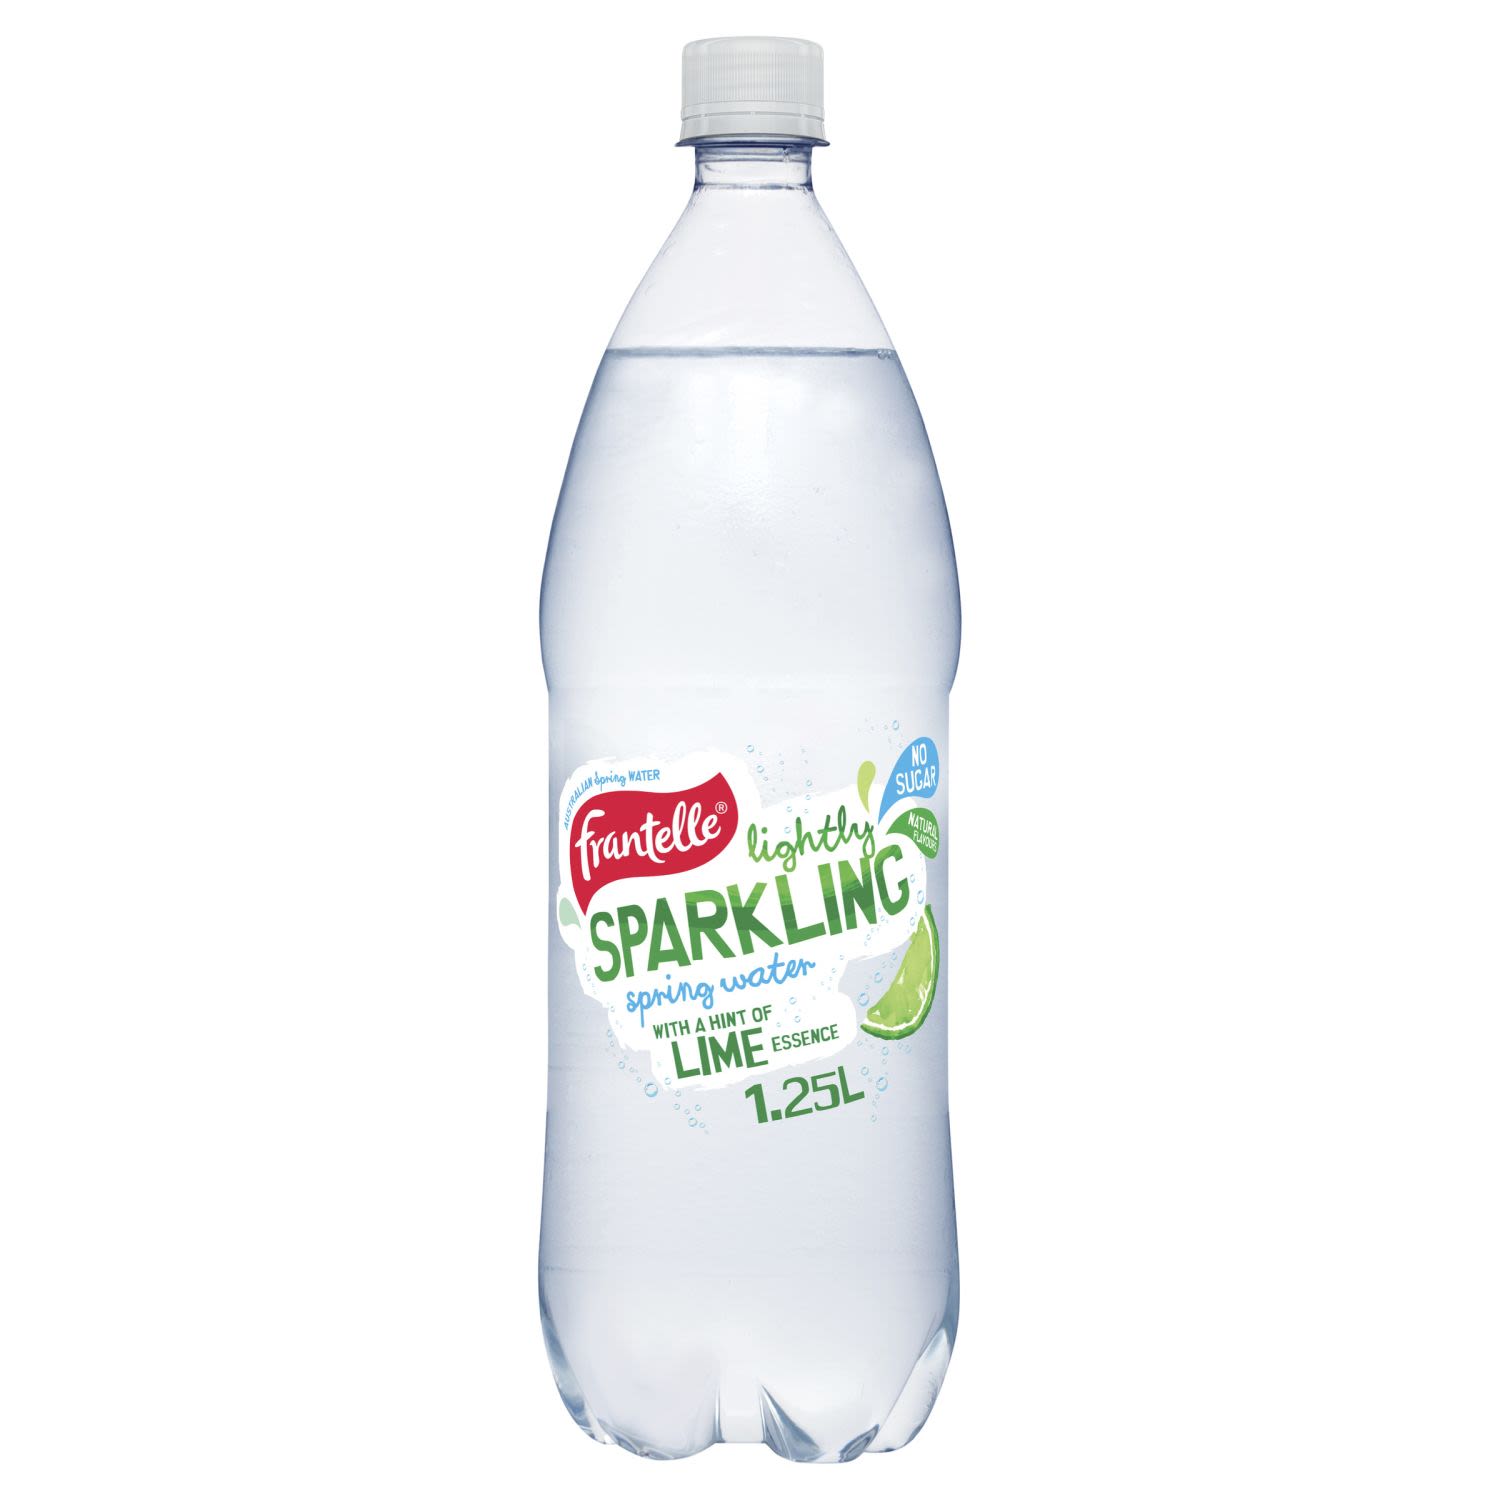 Frantelle Lightly Sparkling Water Lime, 1.25 Litre